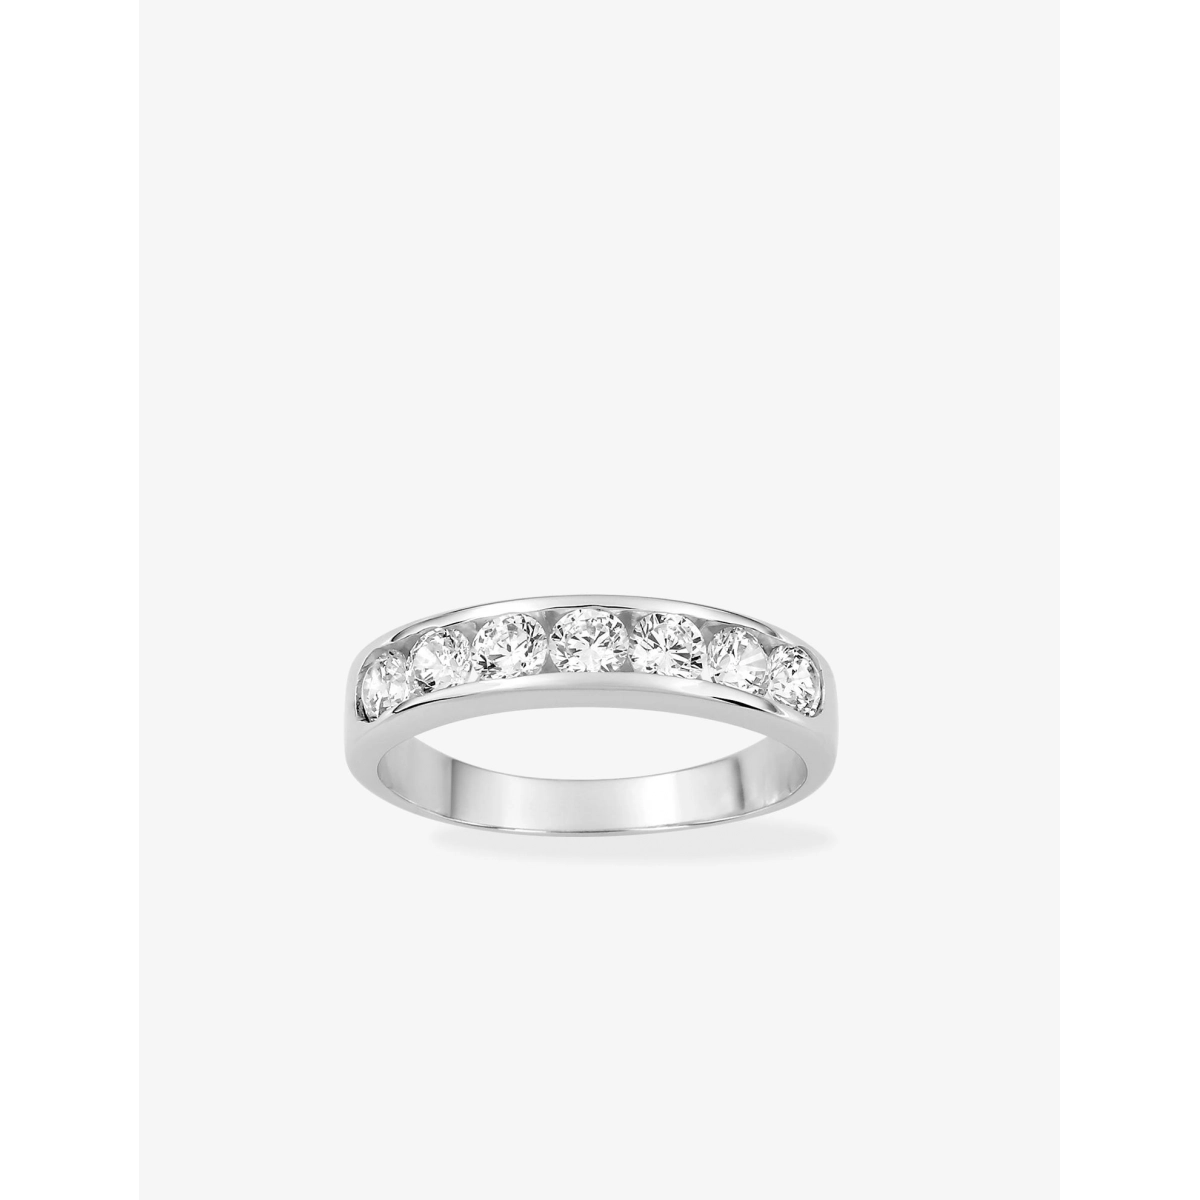 Ring w. cz rh925 Silver Lua Blanca  450630.9 - Size 53